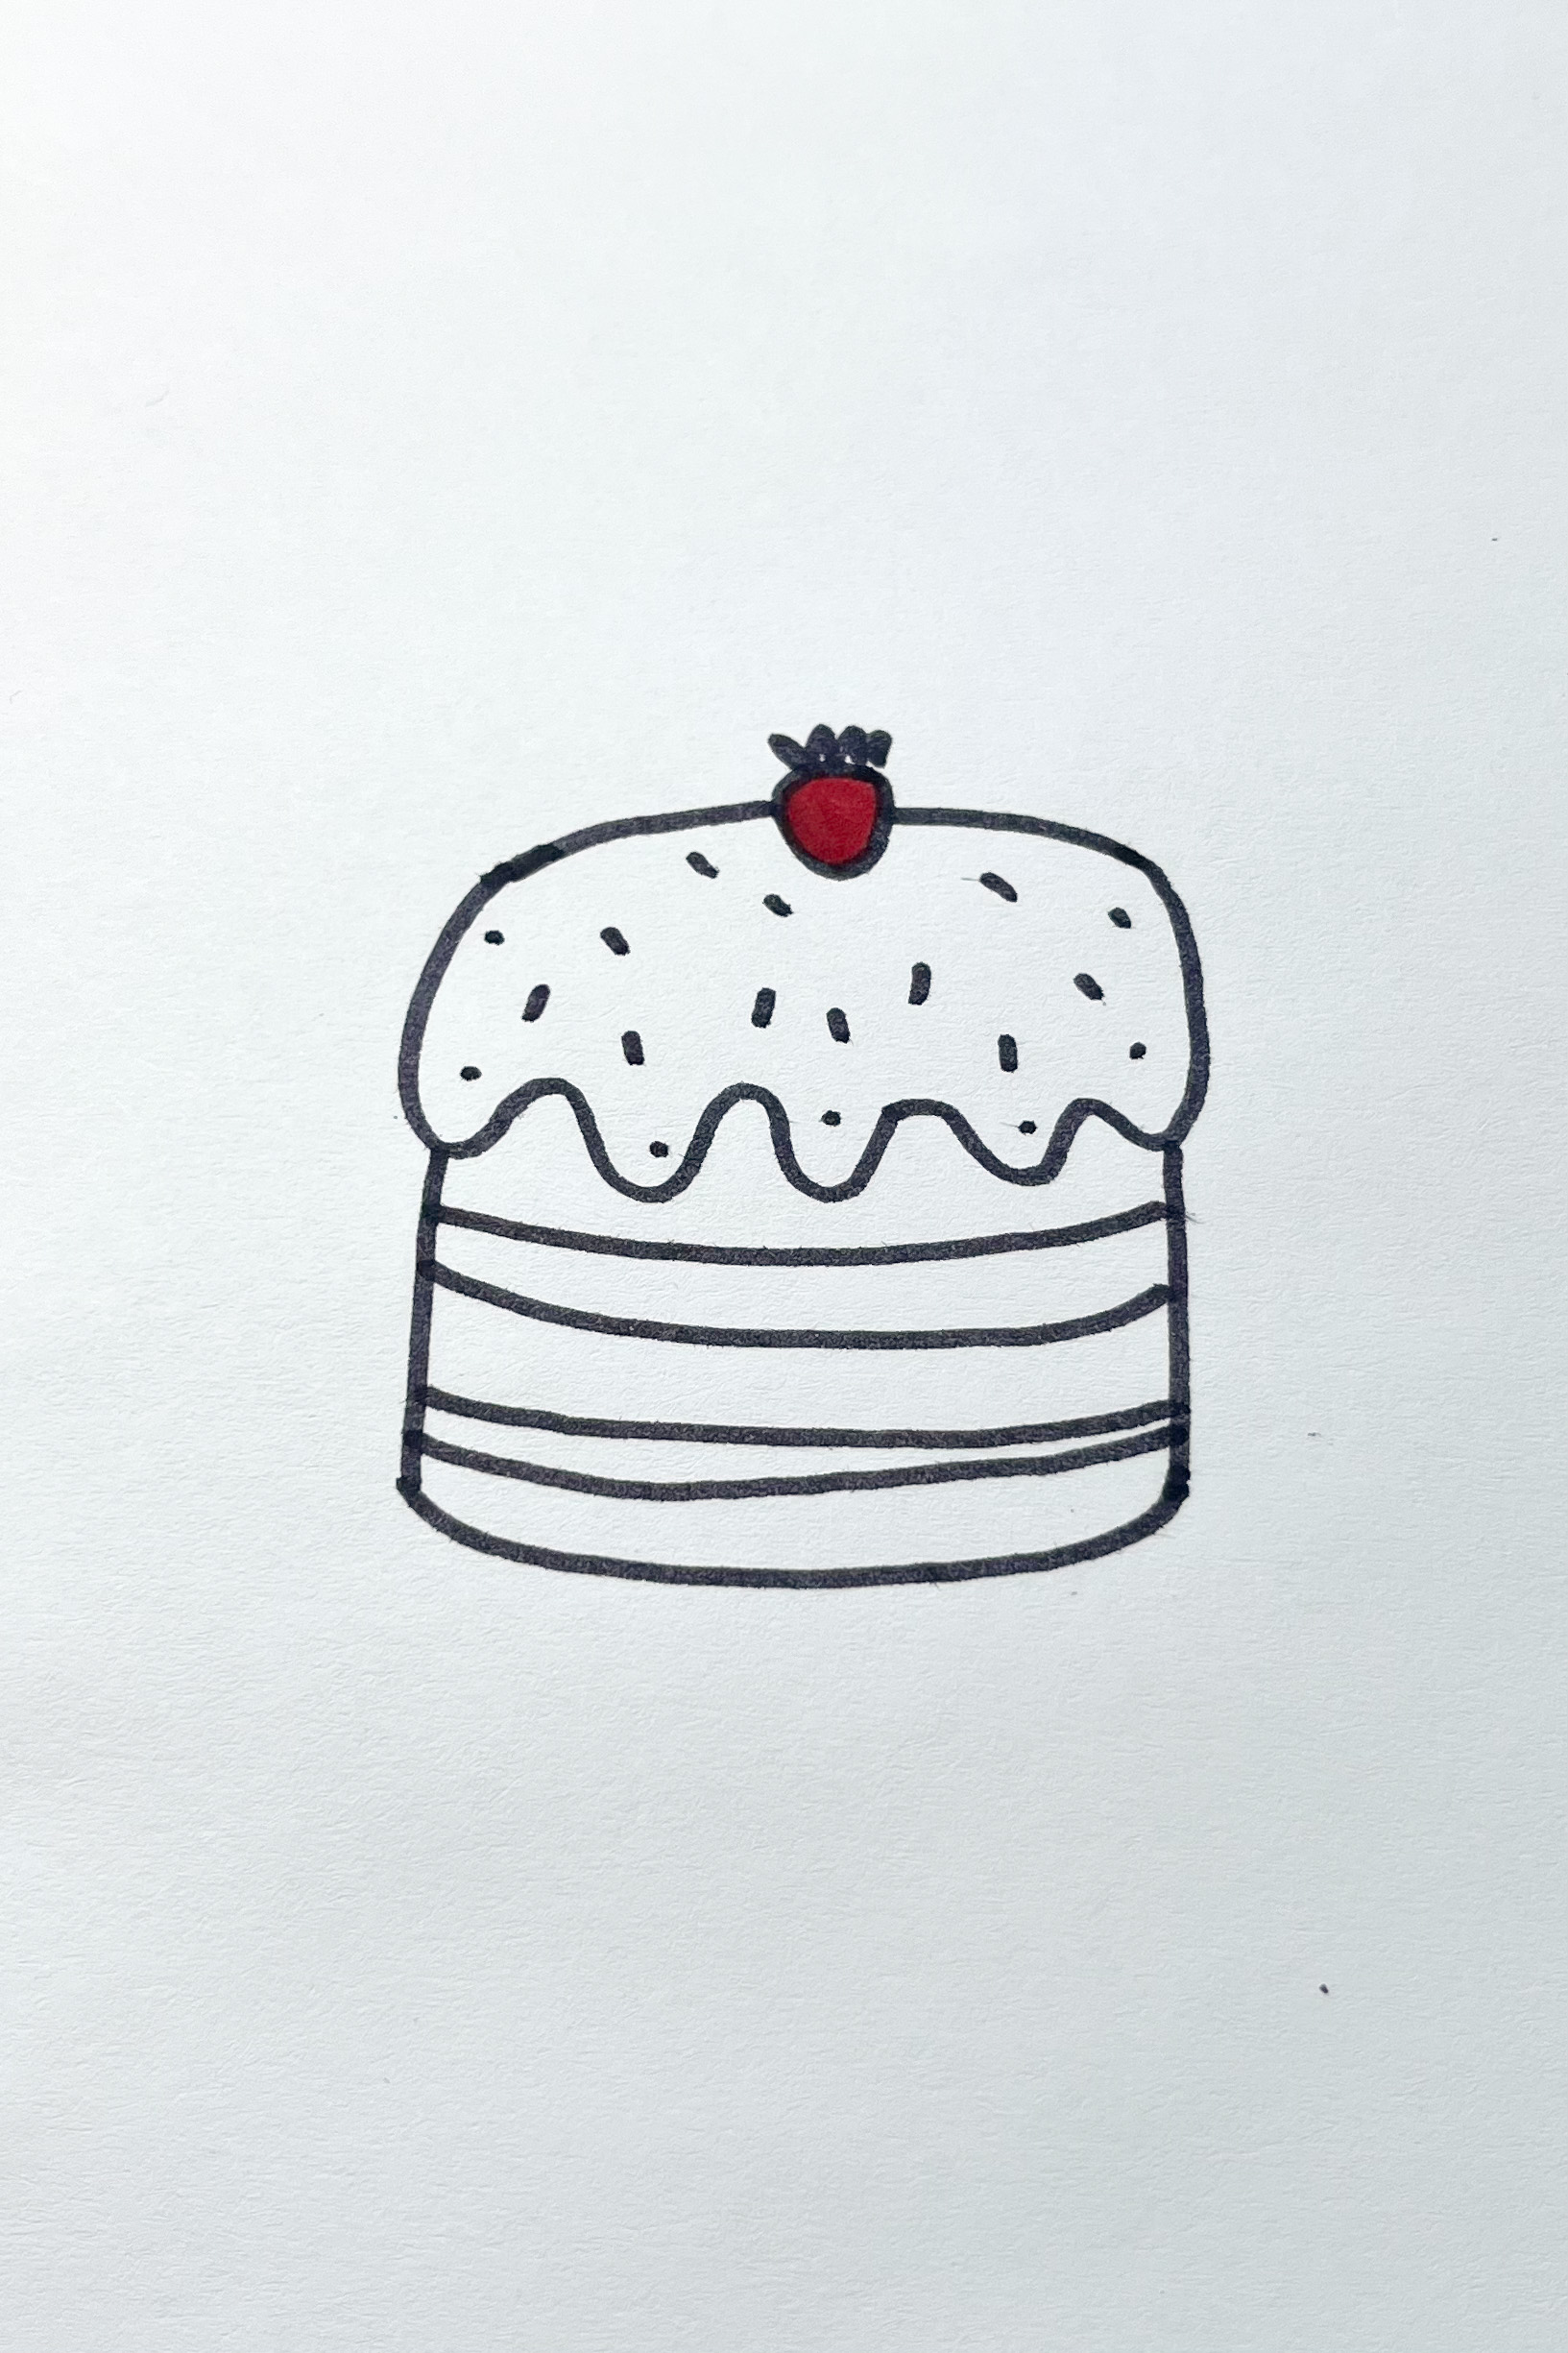 strawberry cake drawing